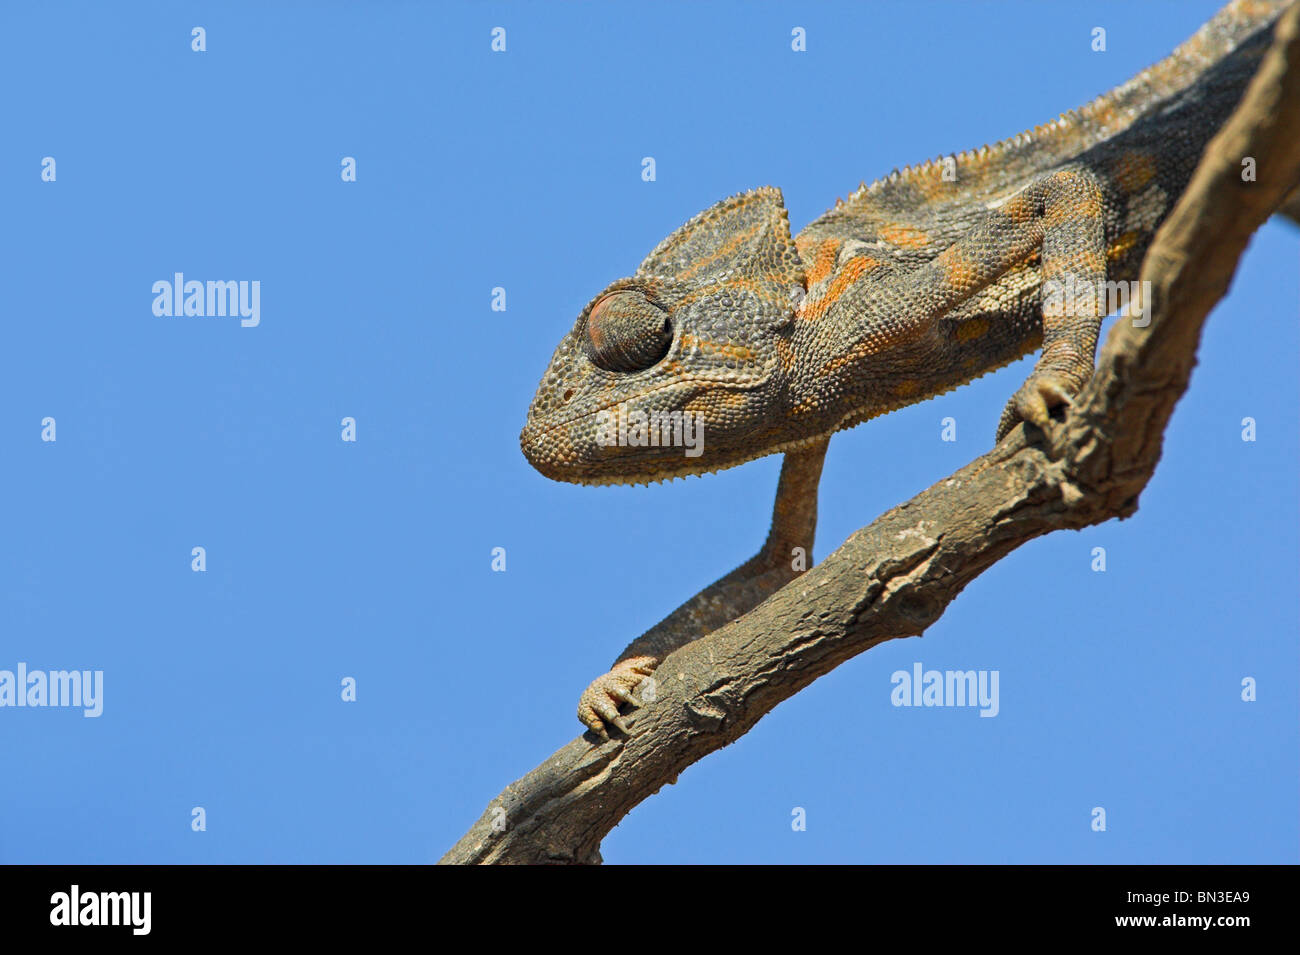 Chameleon (Chamaeleo chamaeleon) climbing on a branch, low angle view Stock Photo